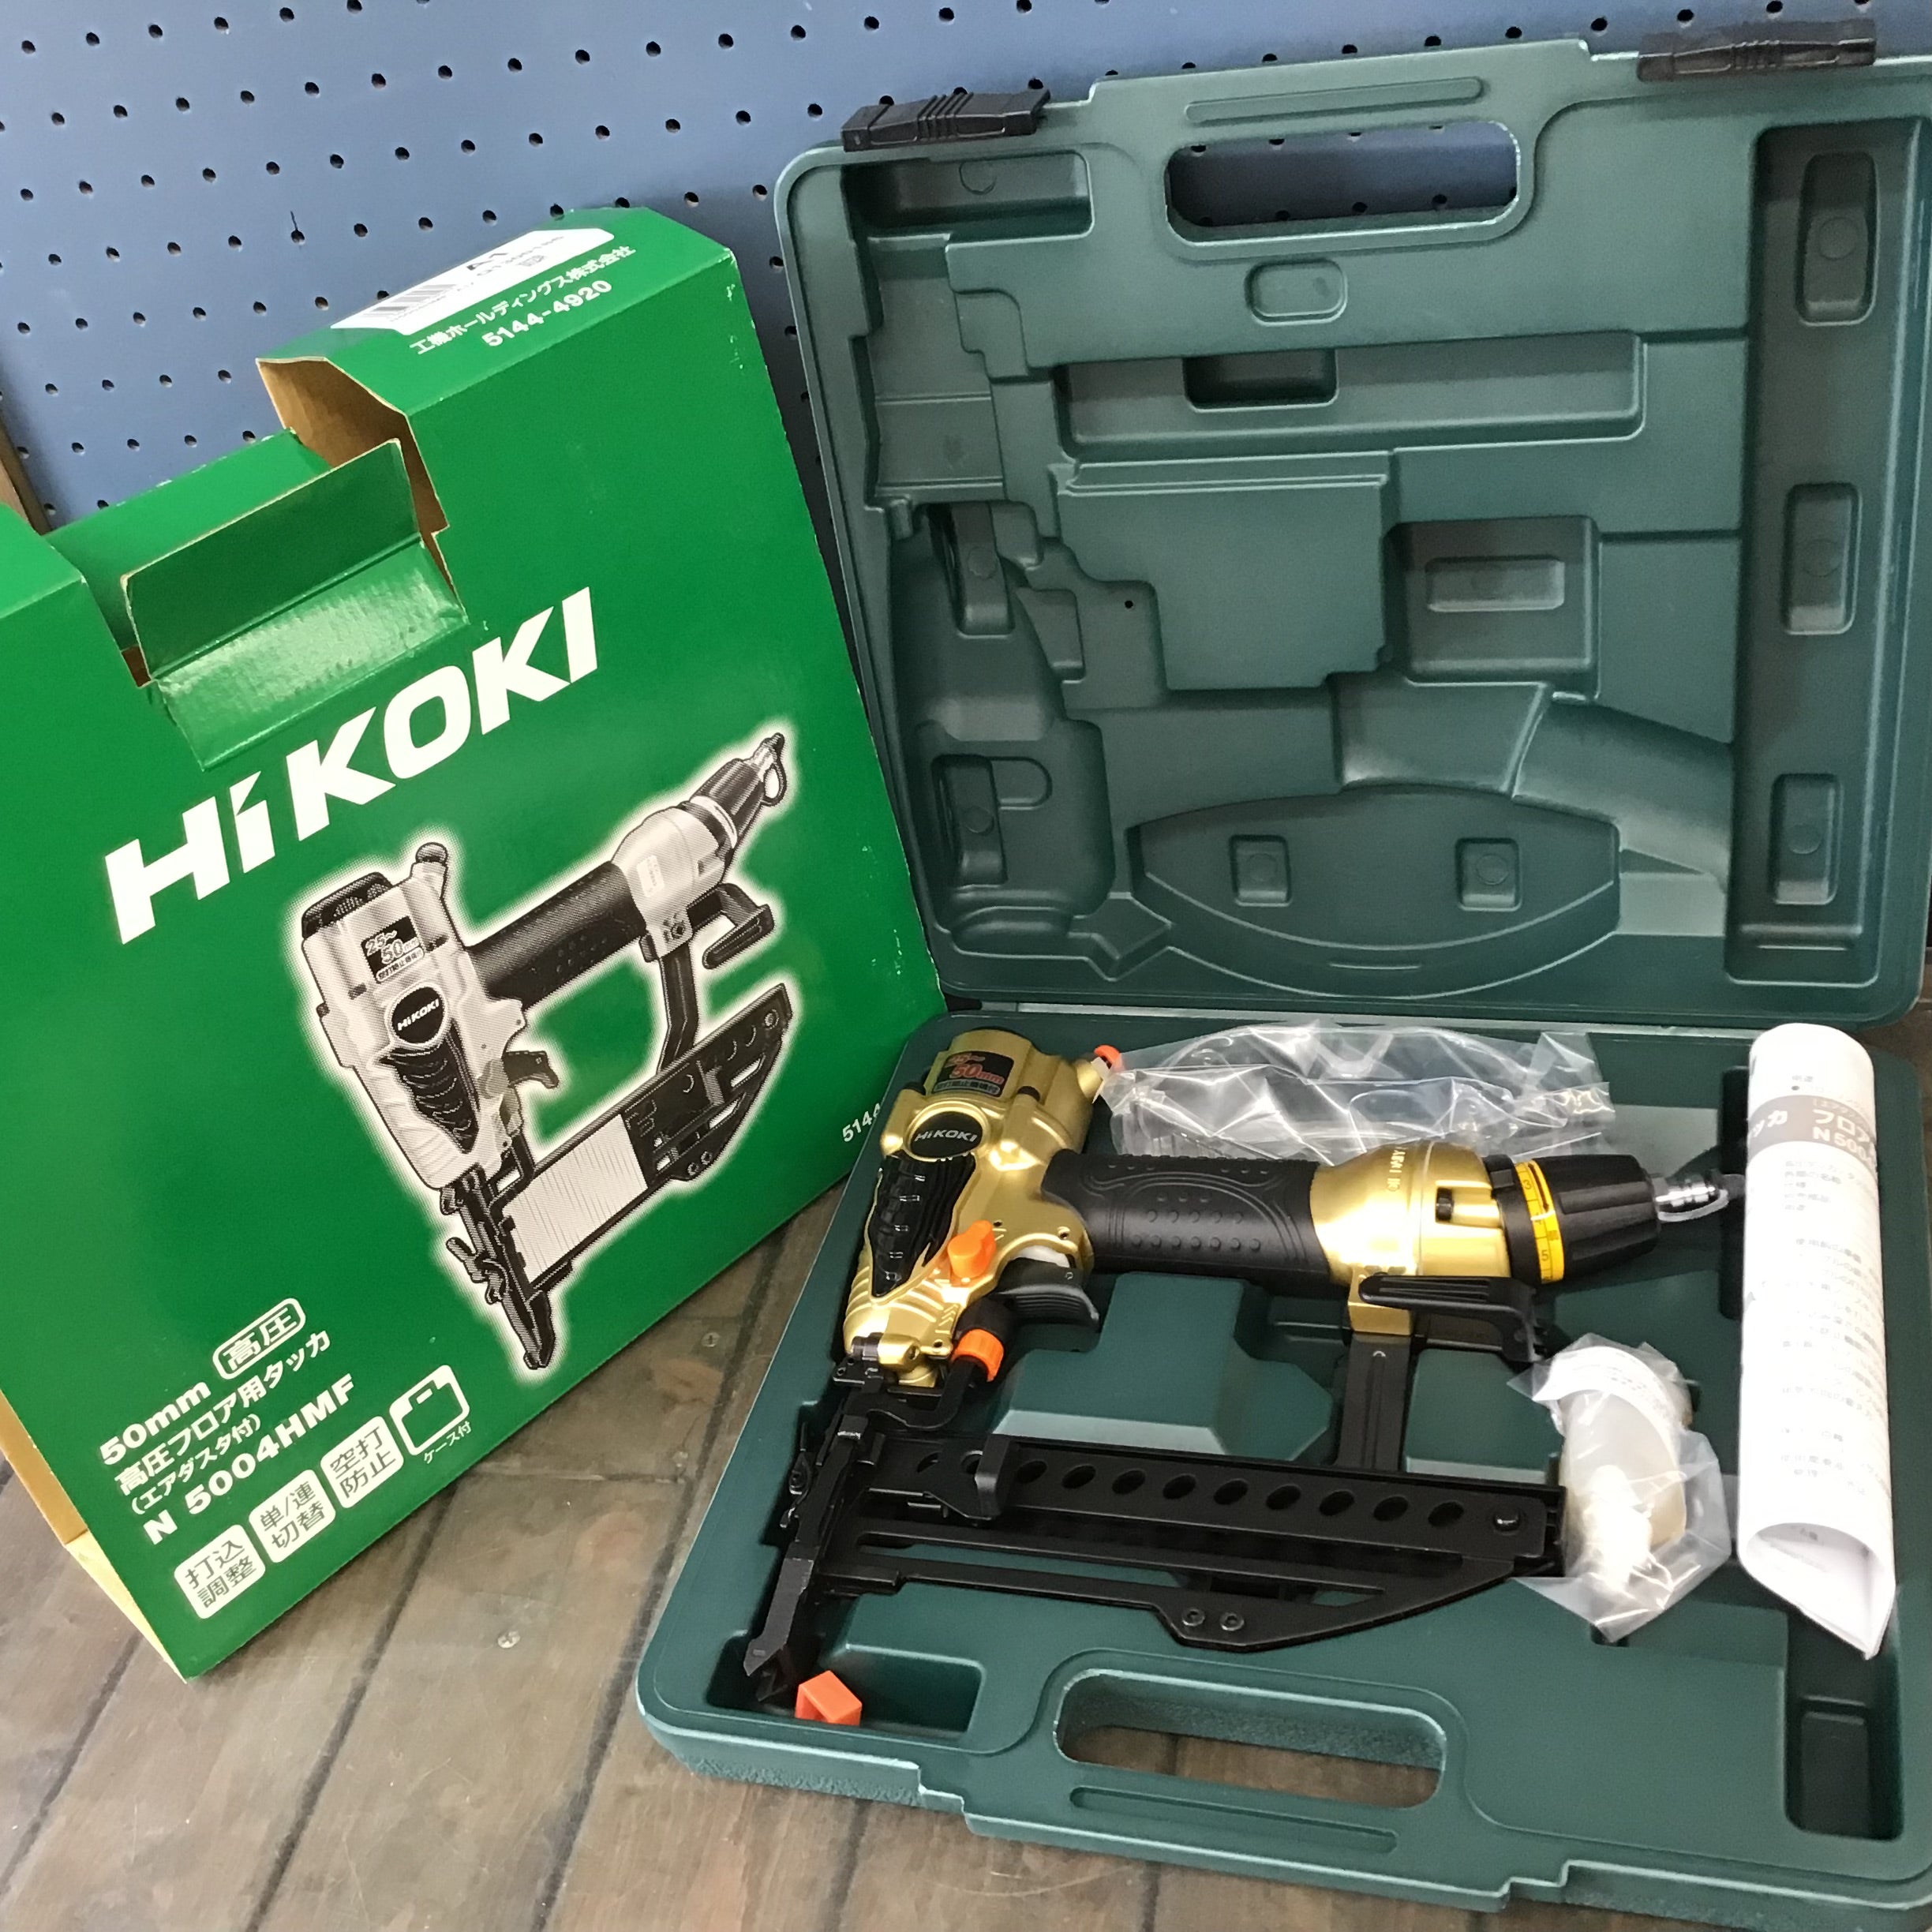 HiKOKI(ハイコーキ) 高圧フロア用タッカー N5004HMF - メンテナンス